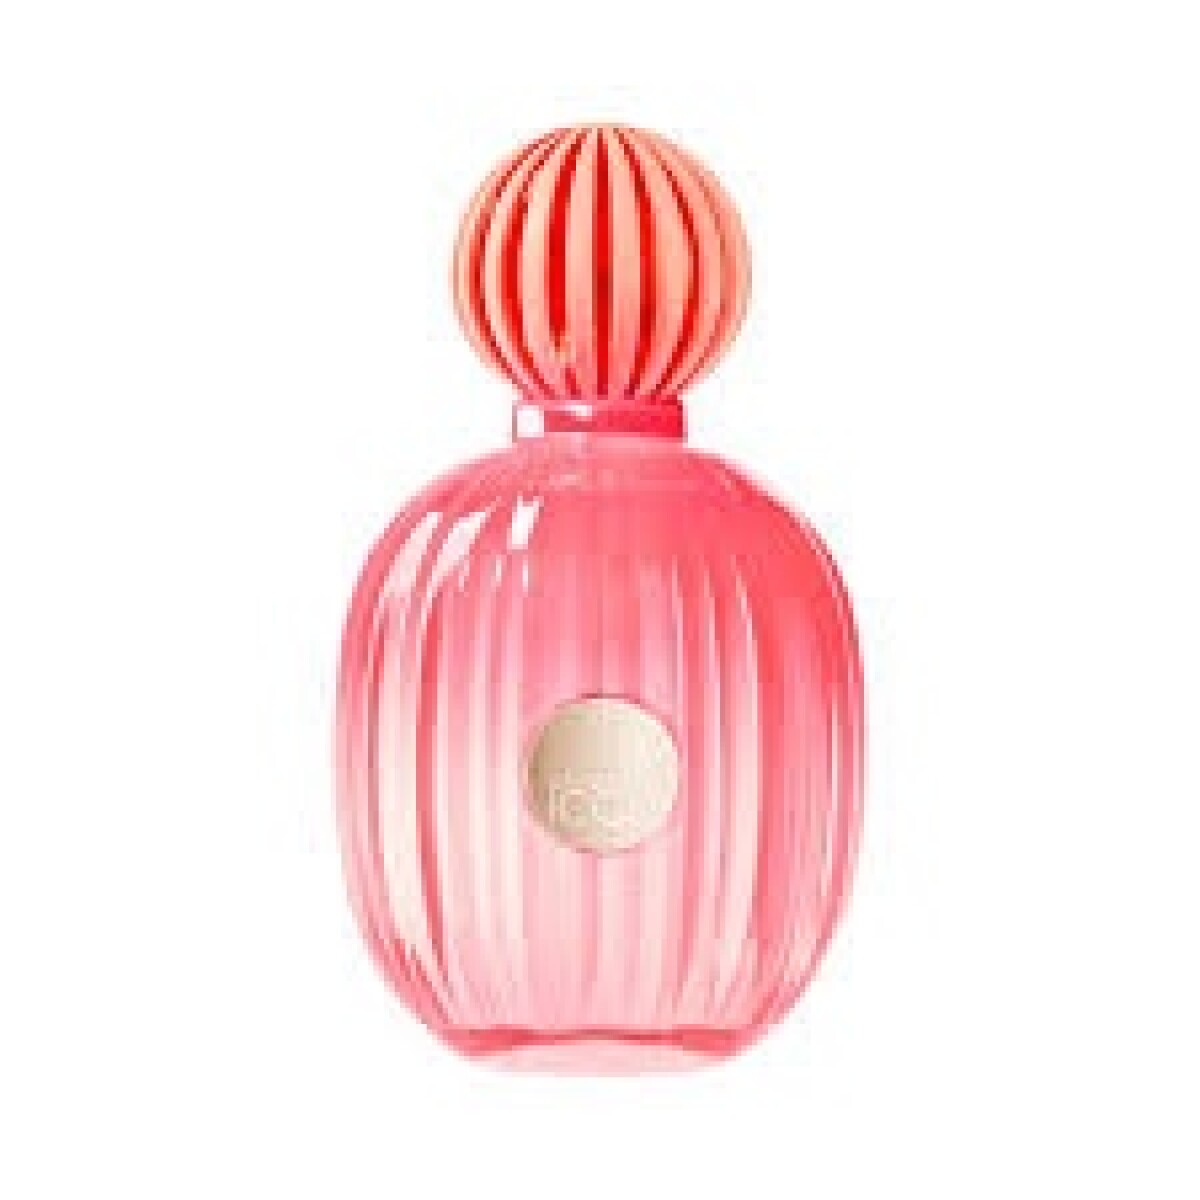 Perfume Antonio Banderas The Icon Splendid Edp 100ml 